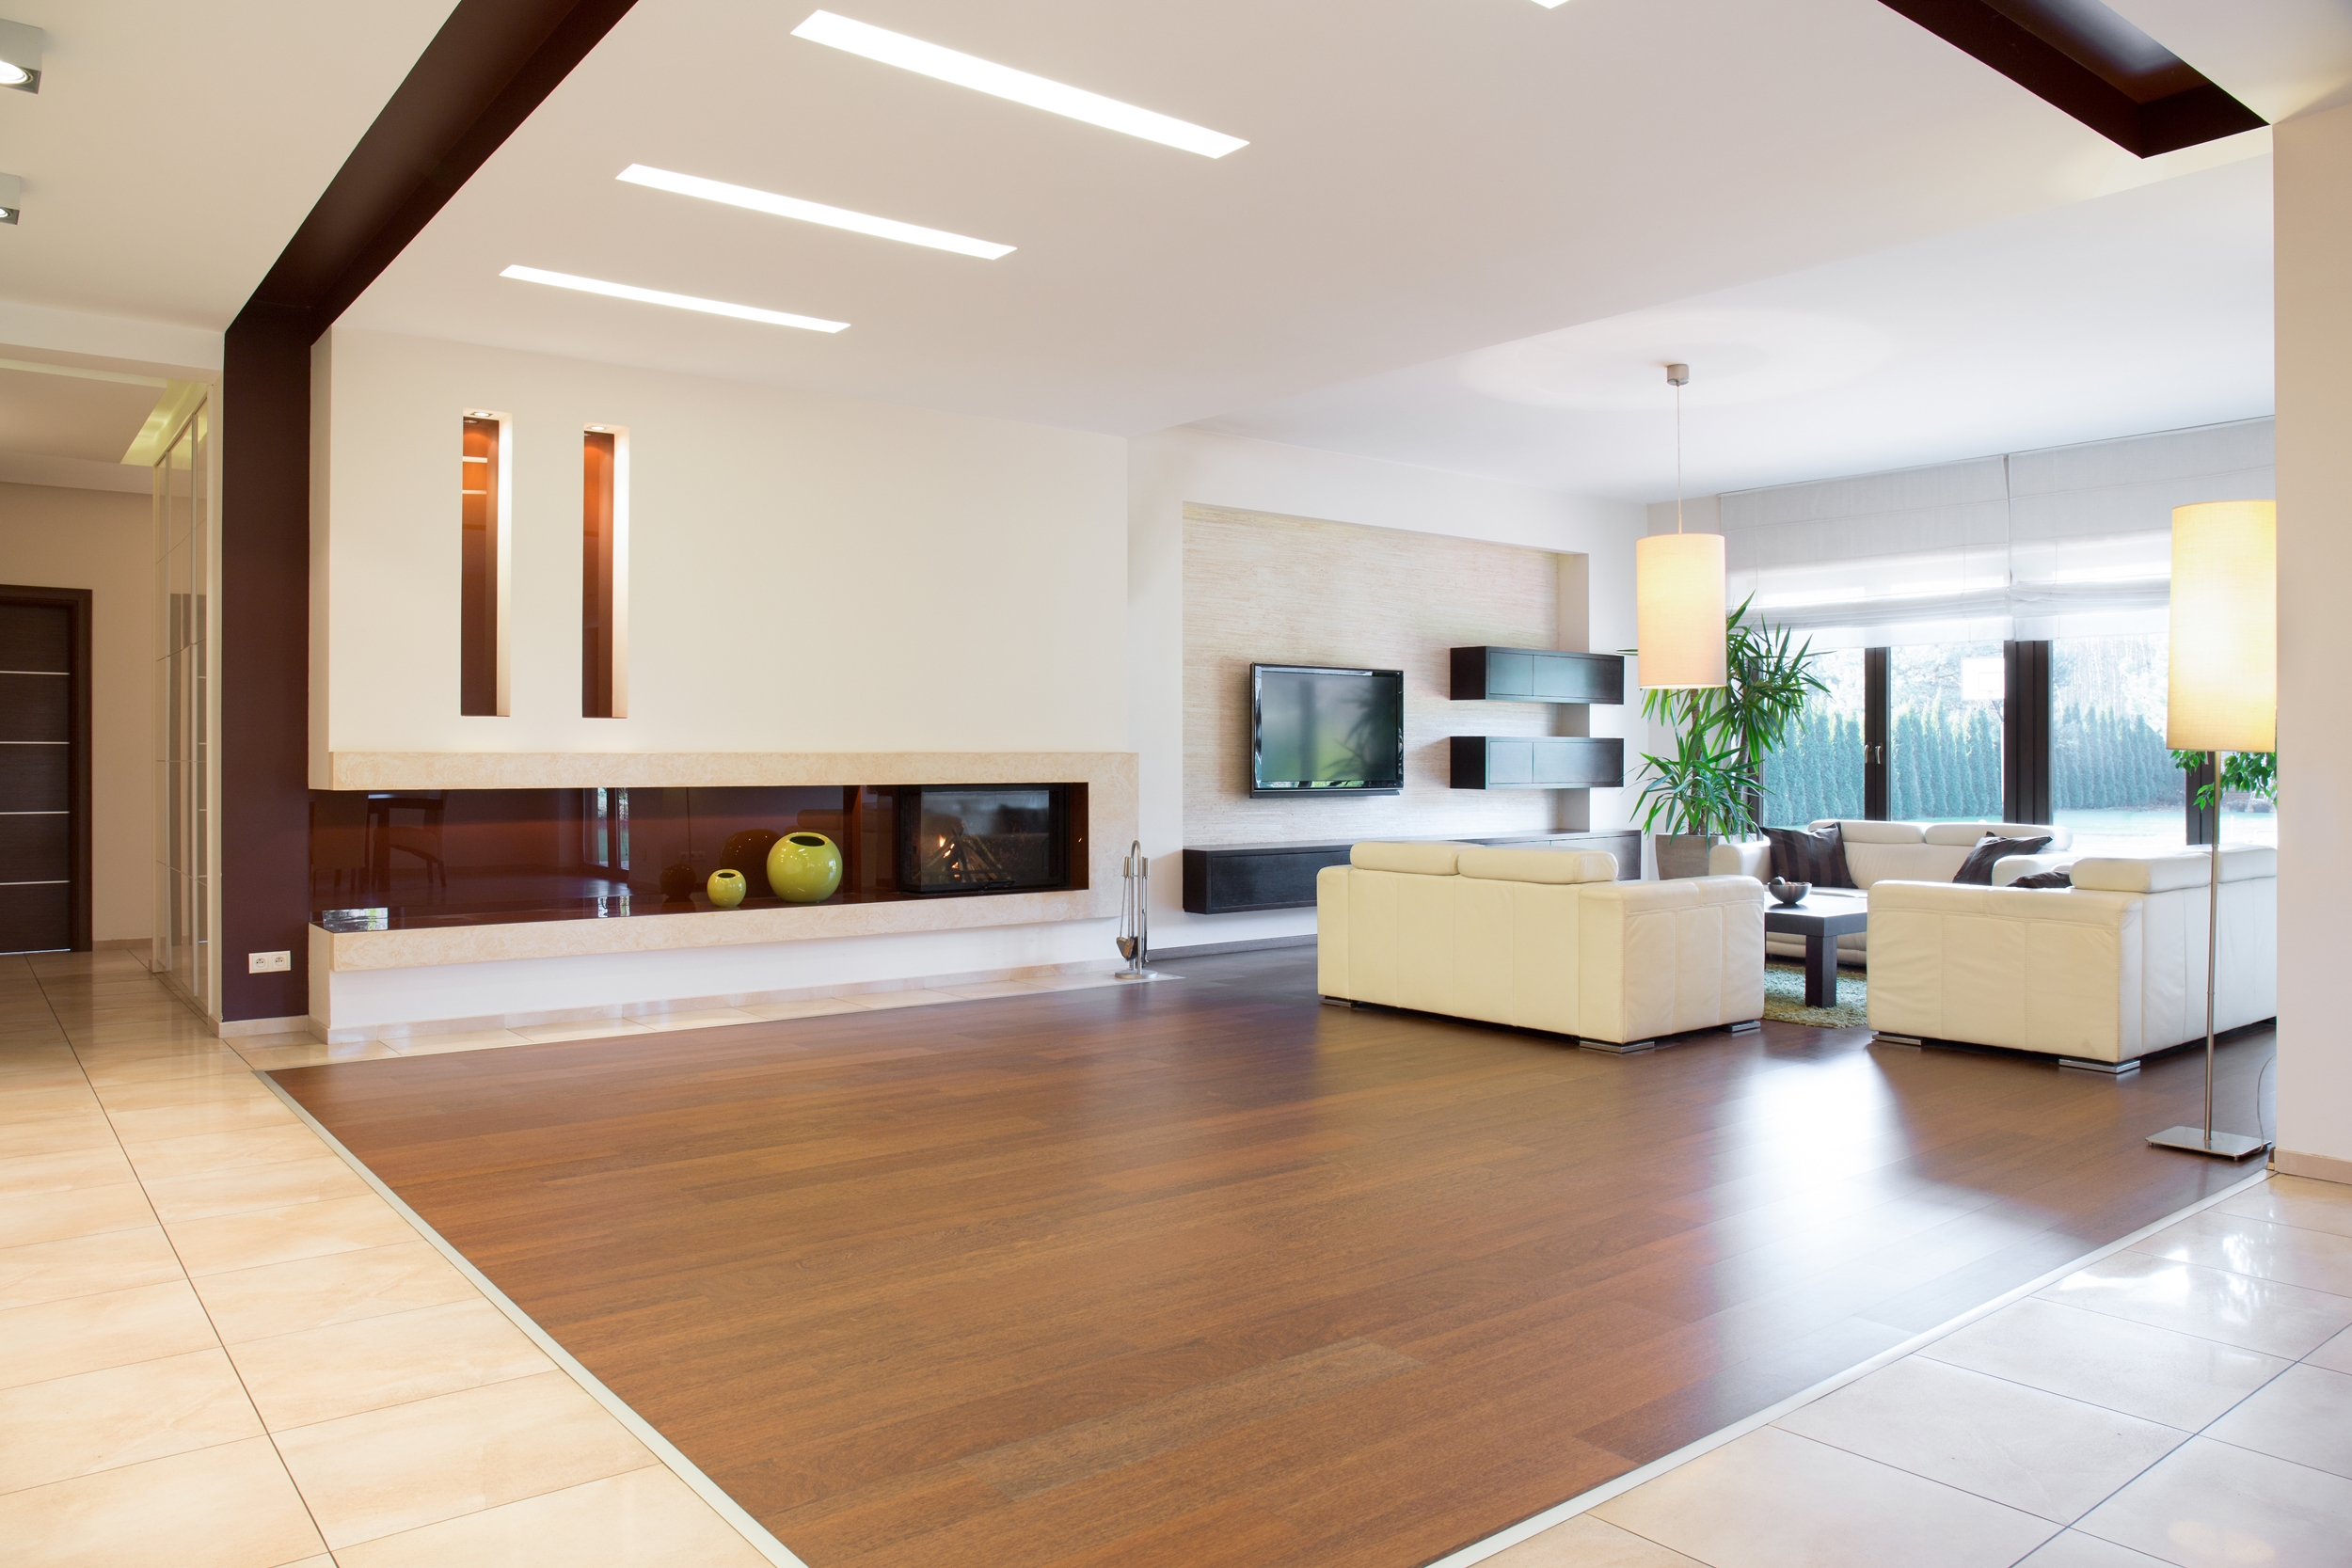 A living room with click vinyl flooring